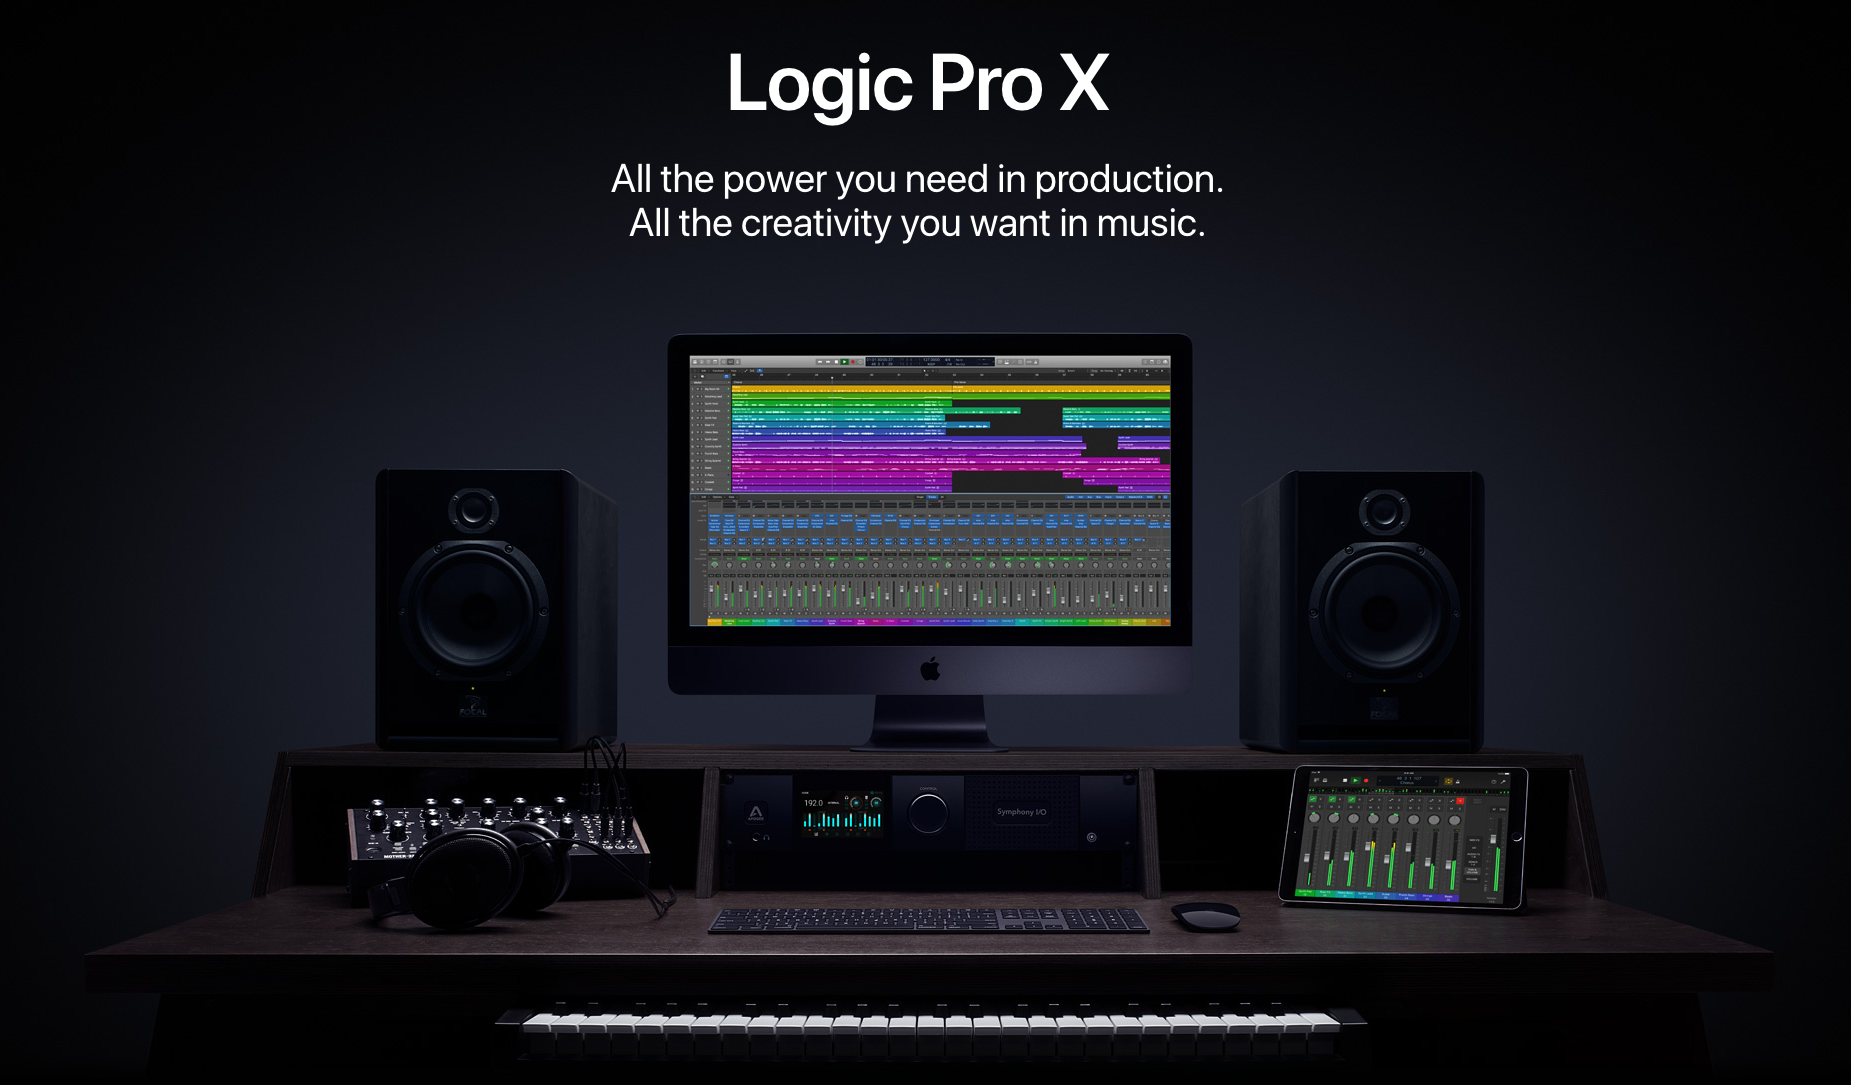 logic pro x free trial for mac